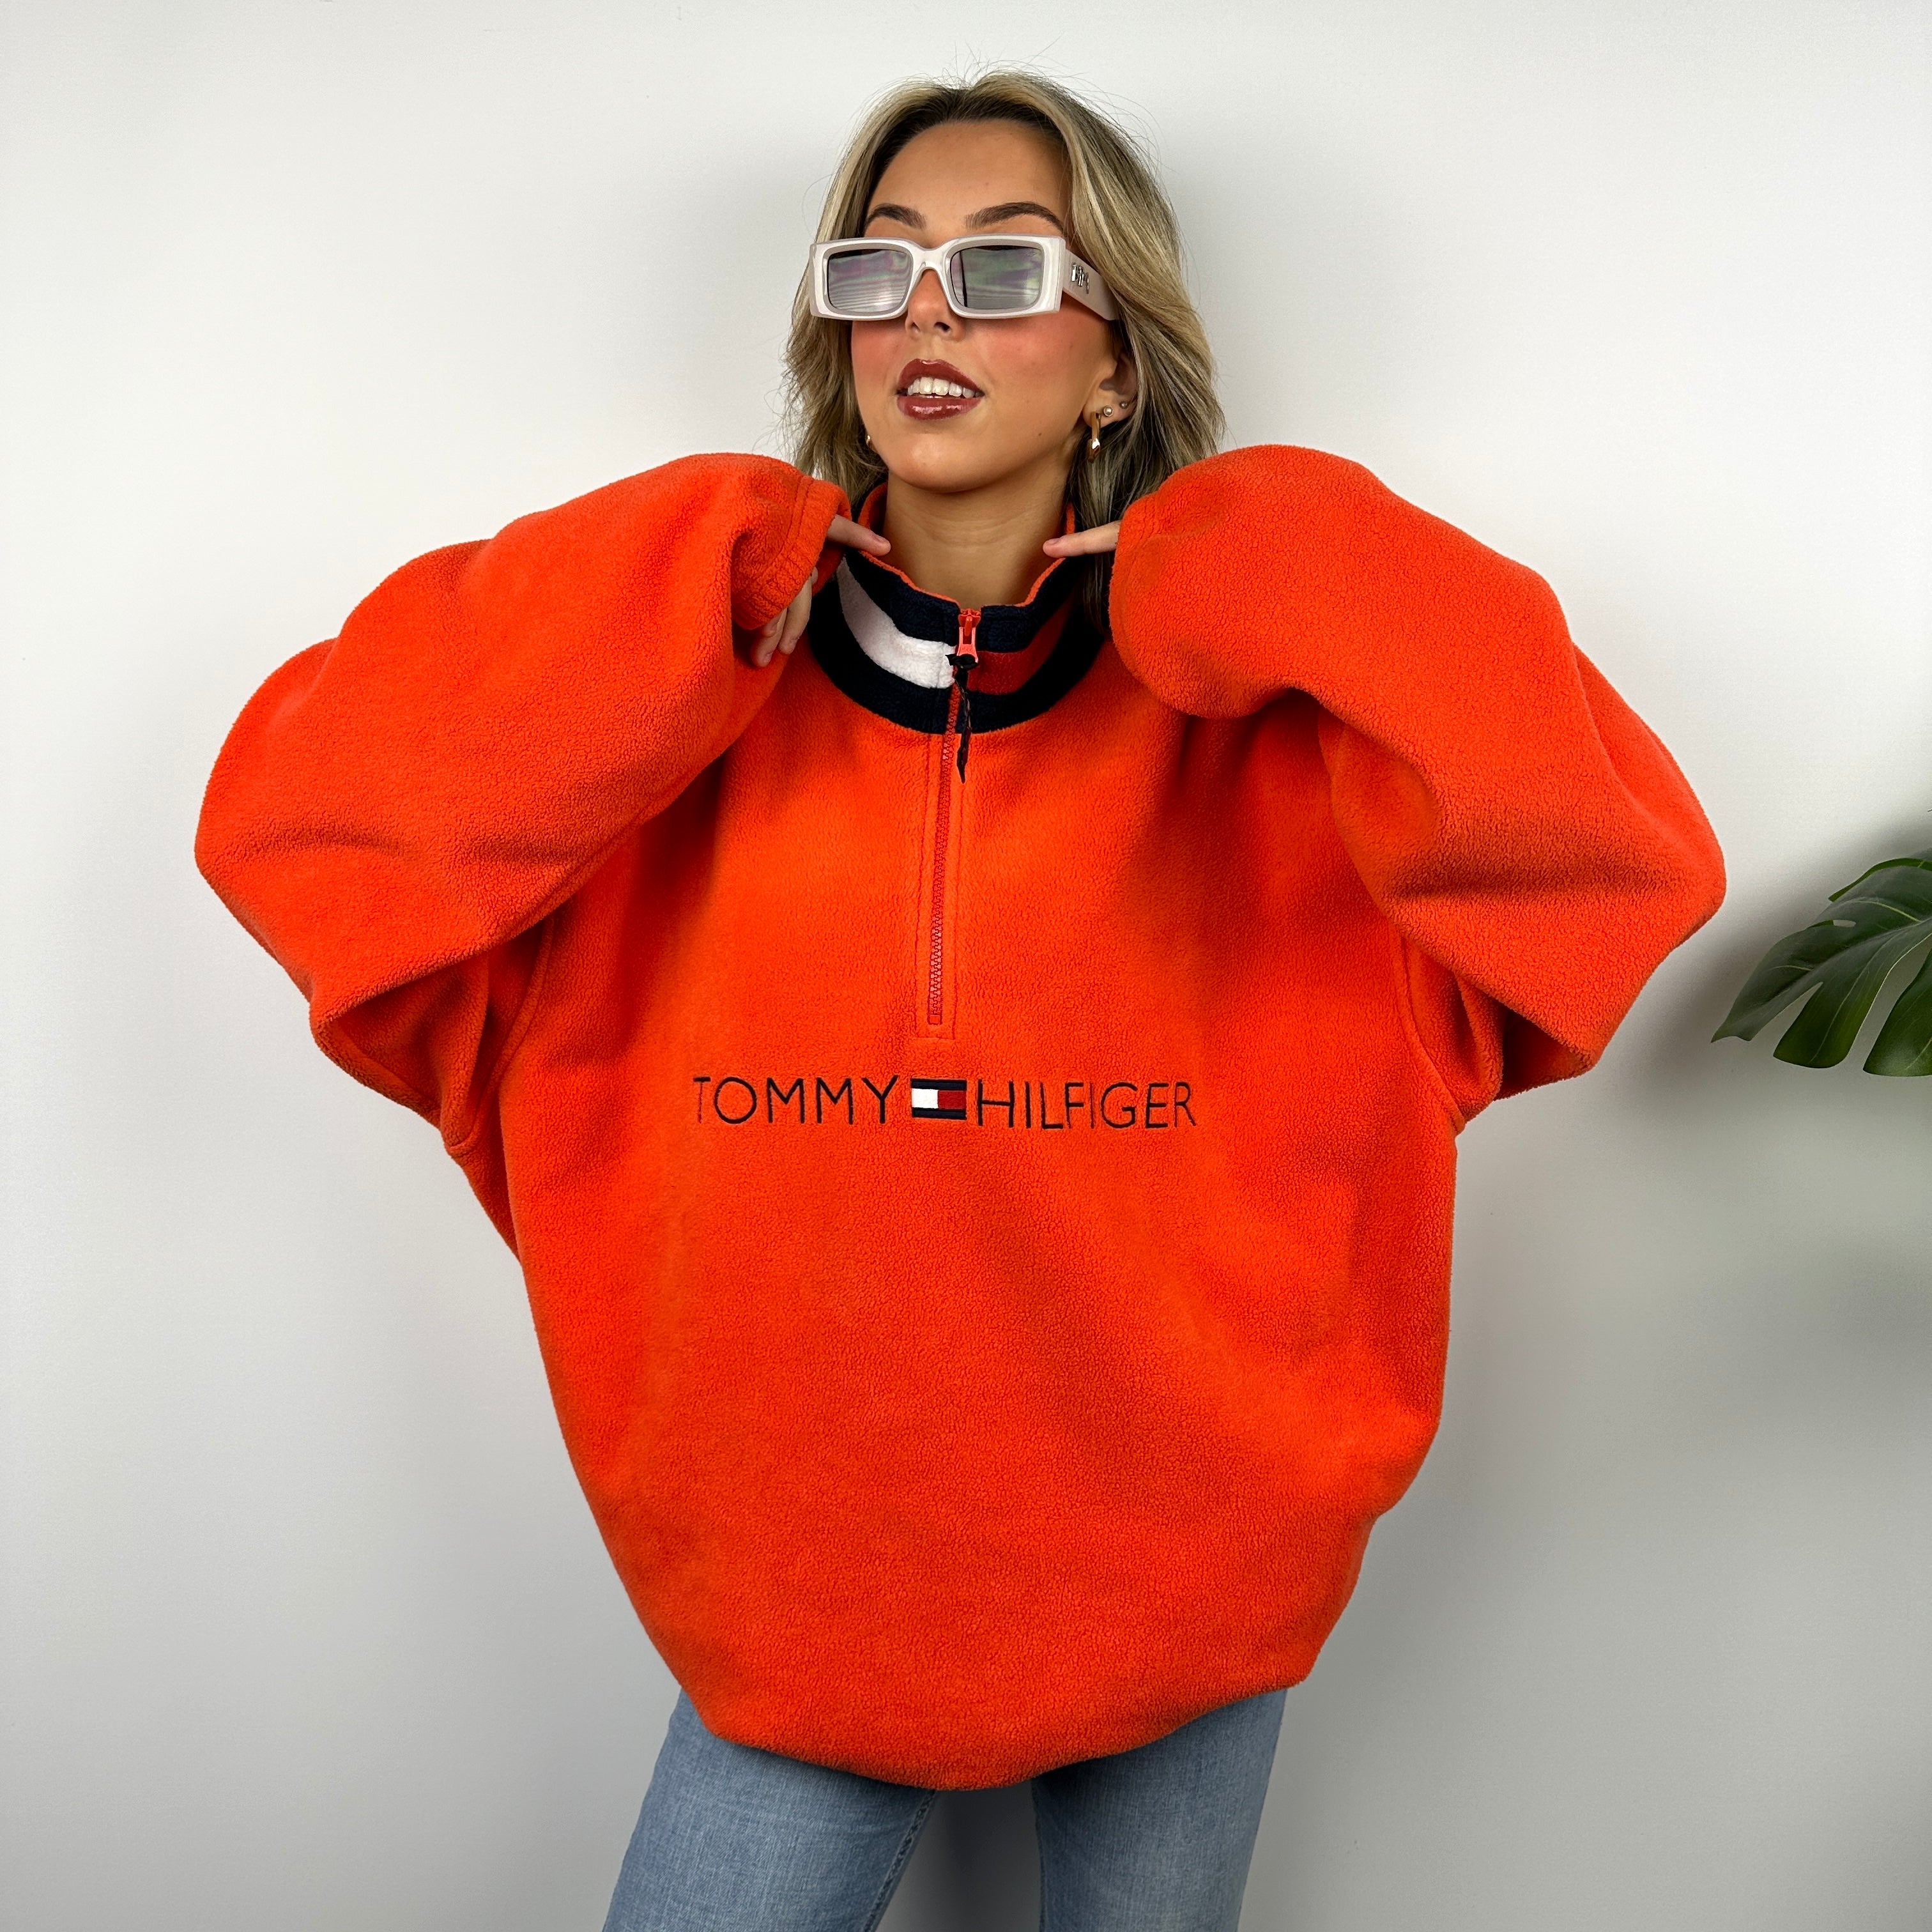 Tommy Hilfiger Orange Embroidered Spell Out Teddy Bear Fleece Quarter Zip Sweatshirt (XXL)